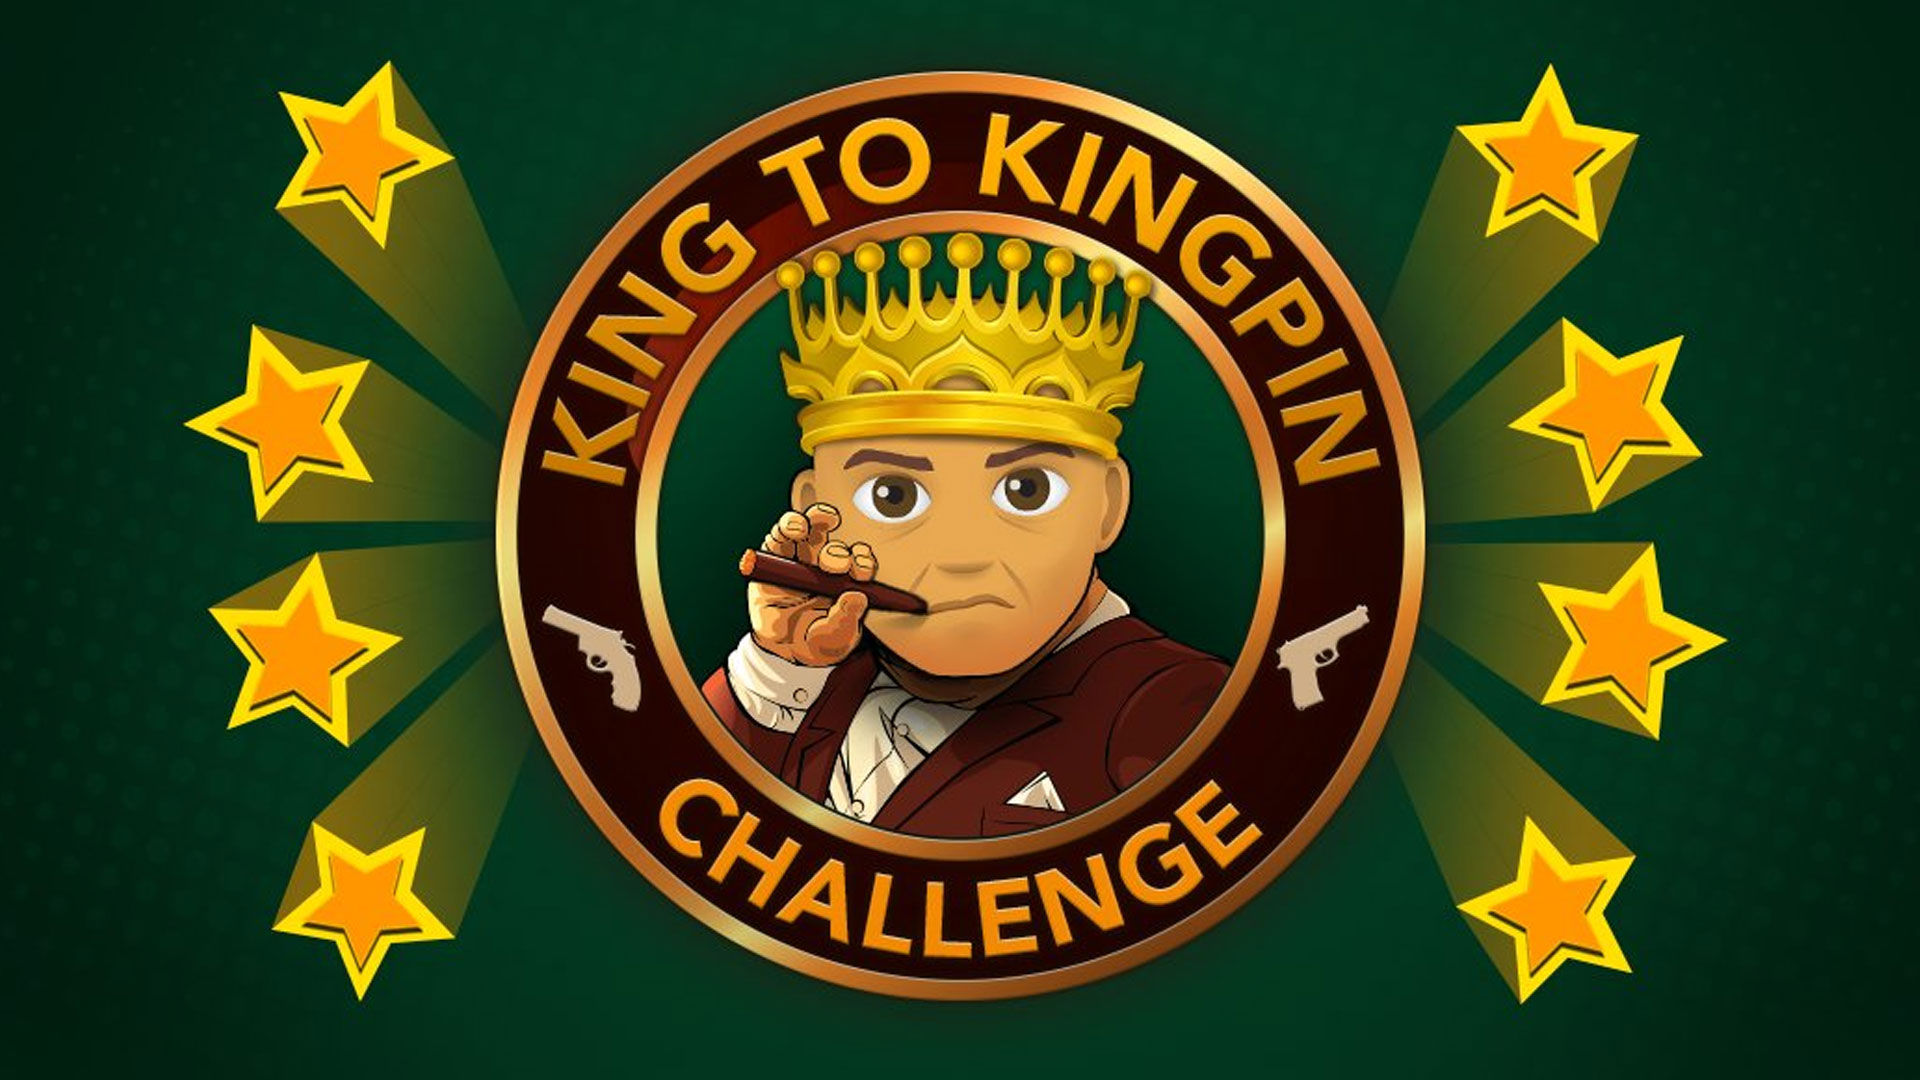 Comment terminer le défi King to Kingpin dans BitLife